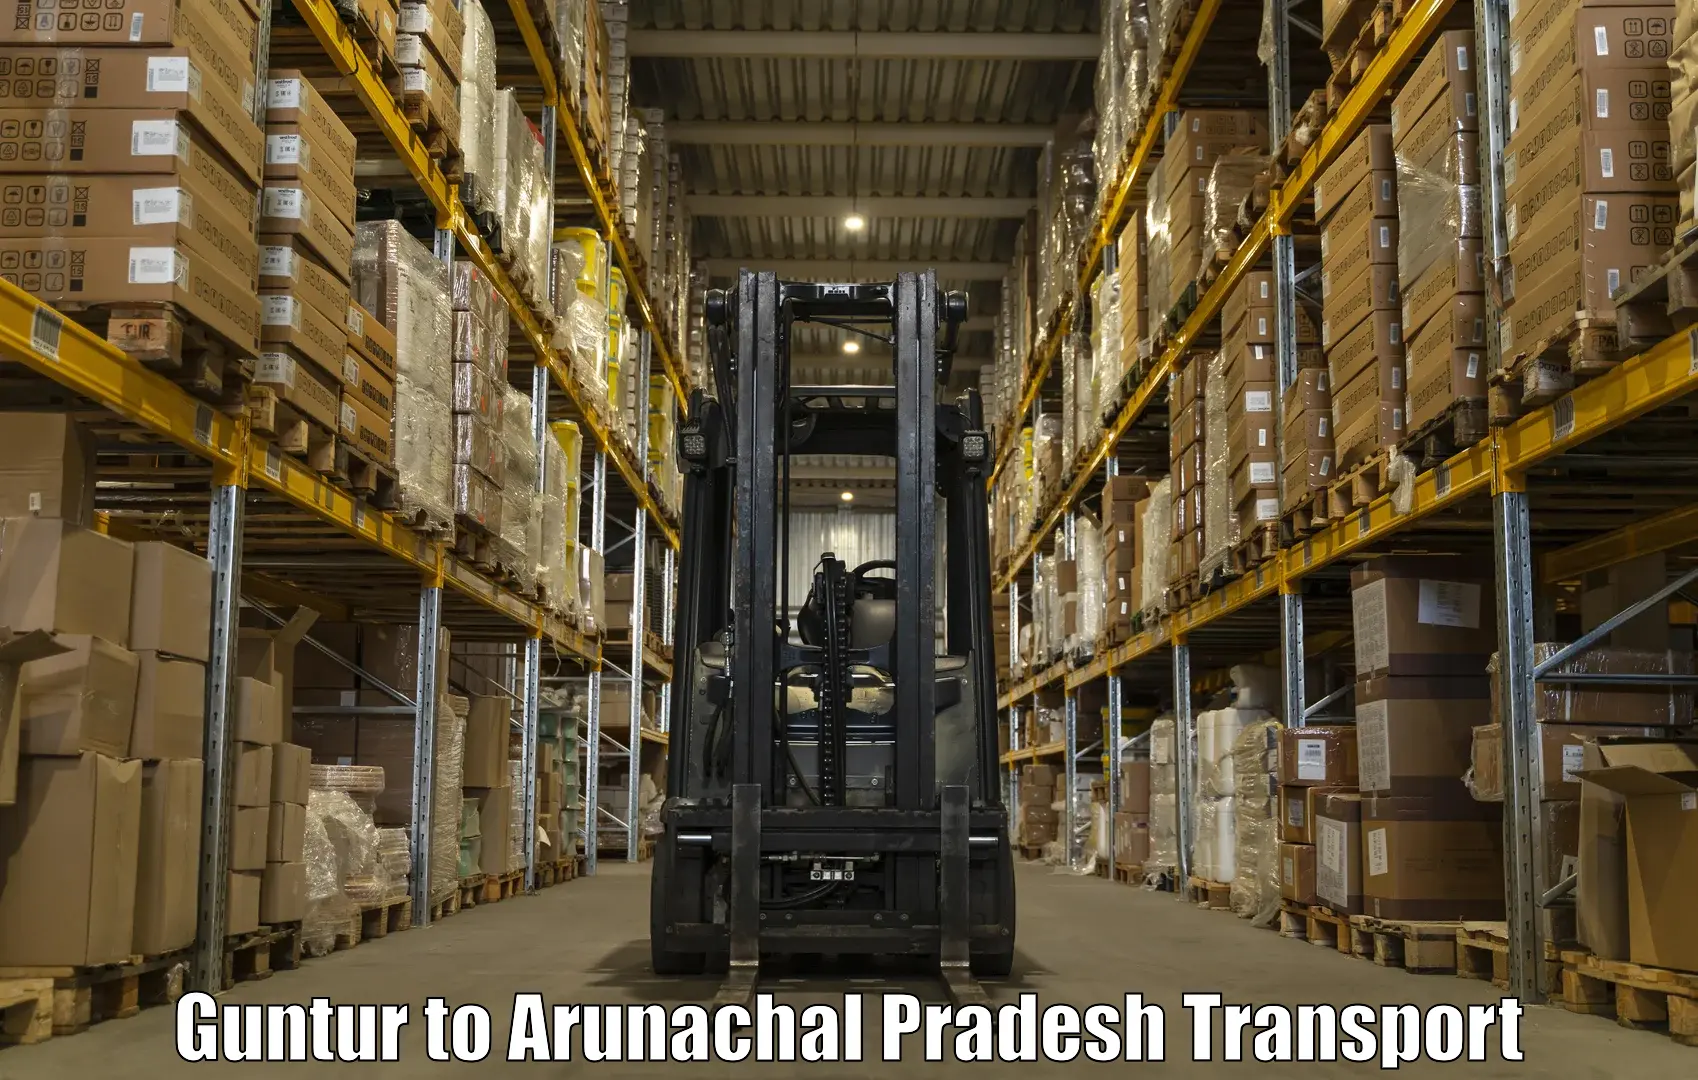 Transport bike from one state to another Guntur to Arunachal Pradesh